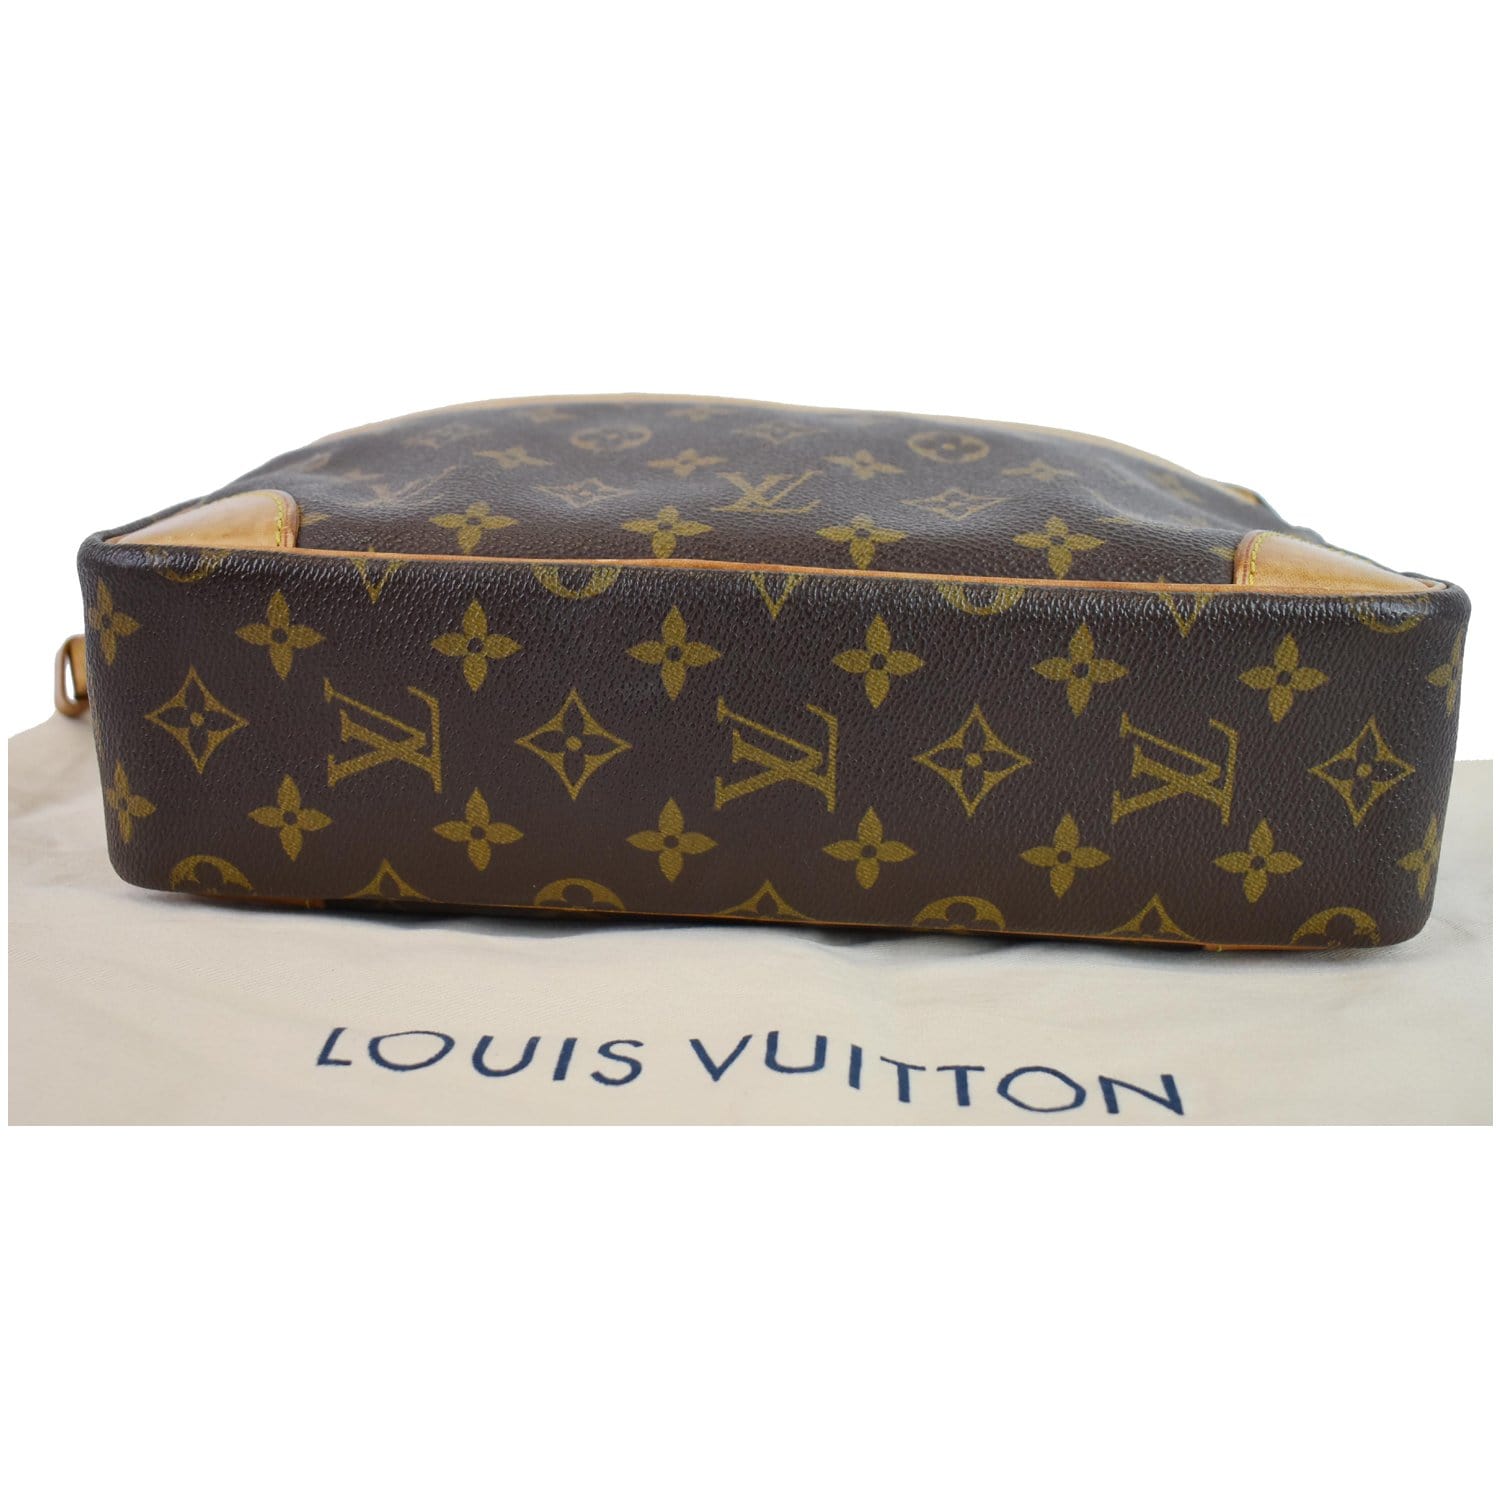 Louis Vuitton Trocadero 23/27/30 bag organiser liner insert